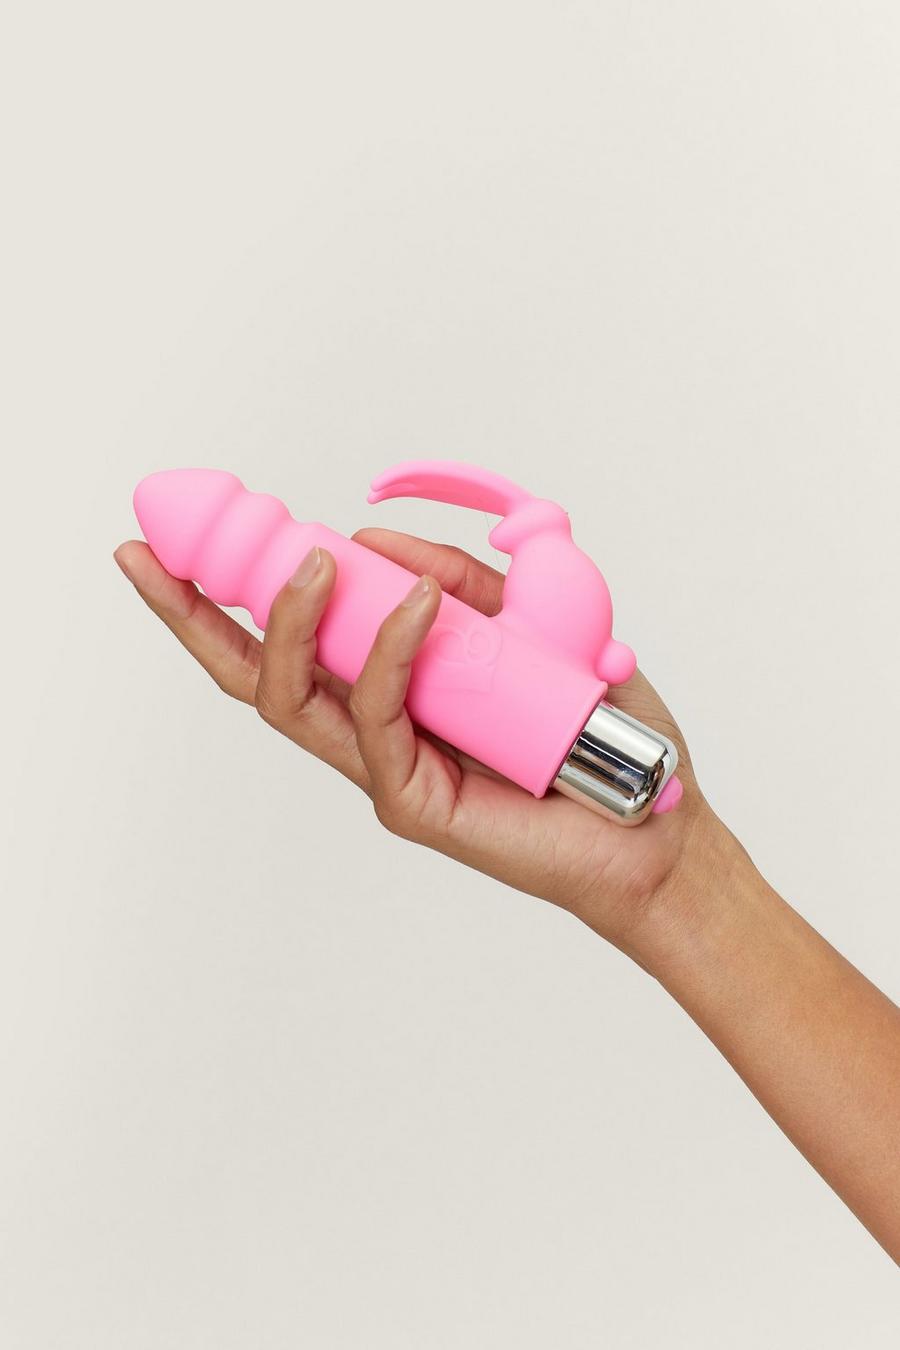 Dual Use Rabbit Vibrator Sex Toy